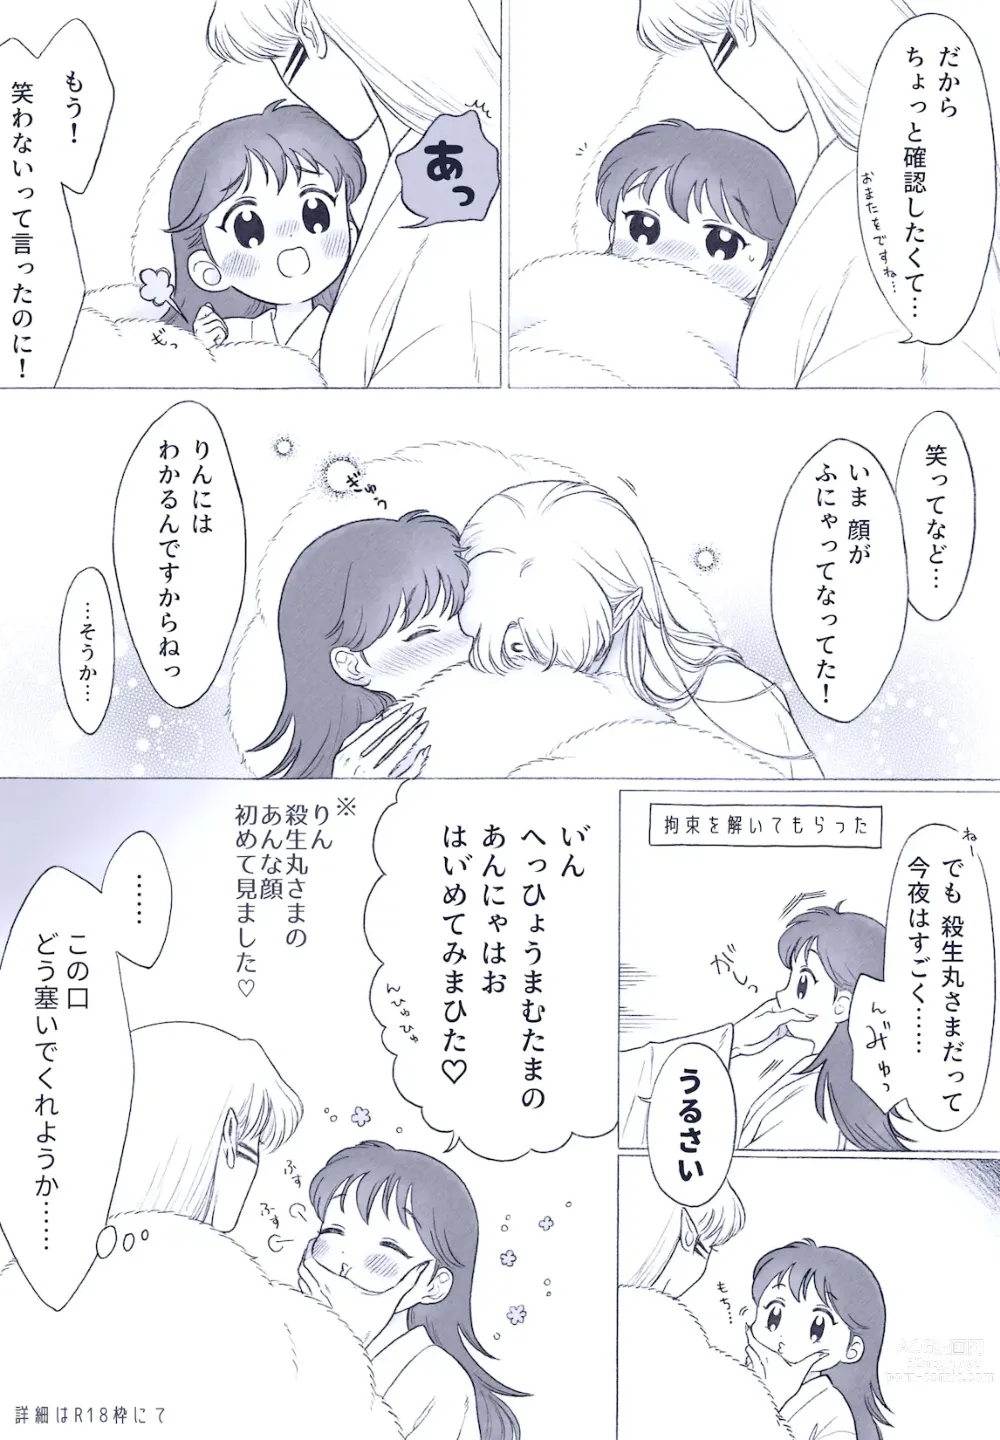 Page 5 of doujinshi Otona no SeRin Manga